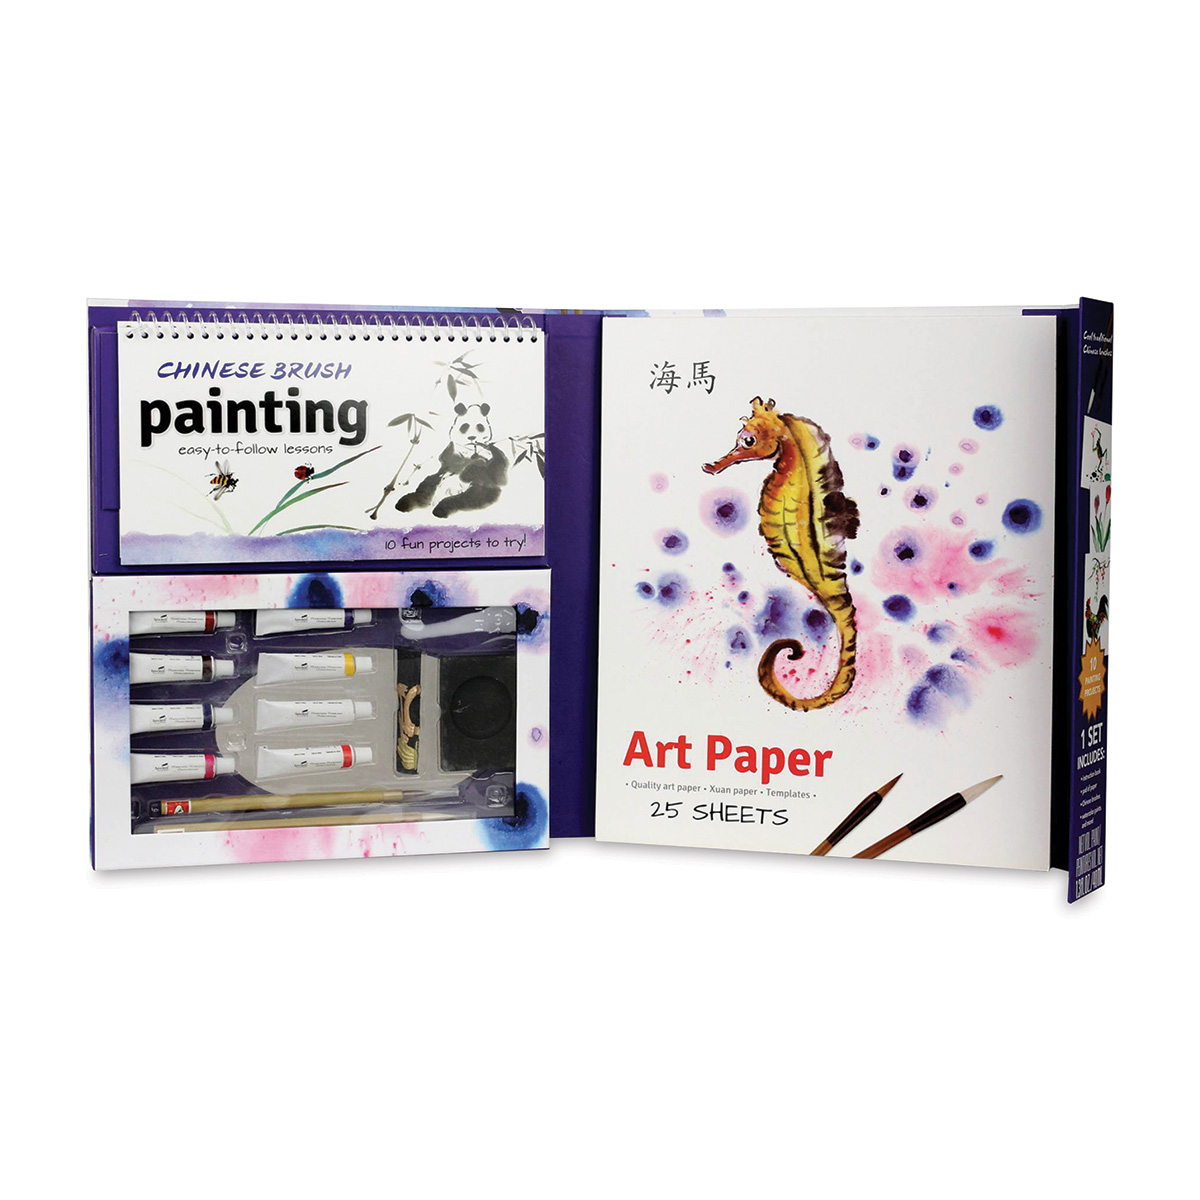 SpiceBox Children's Art Kits Petit Picasso Pastels